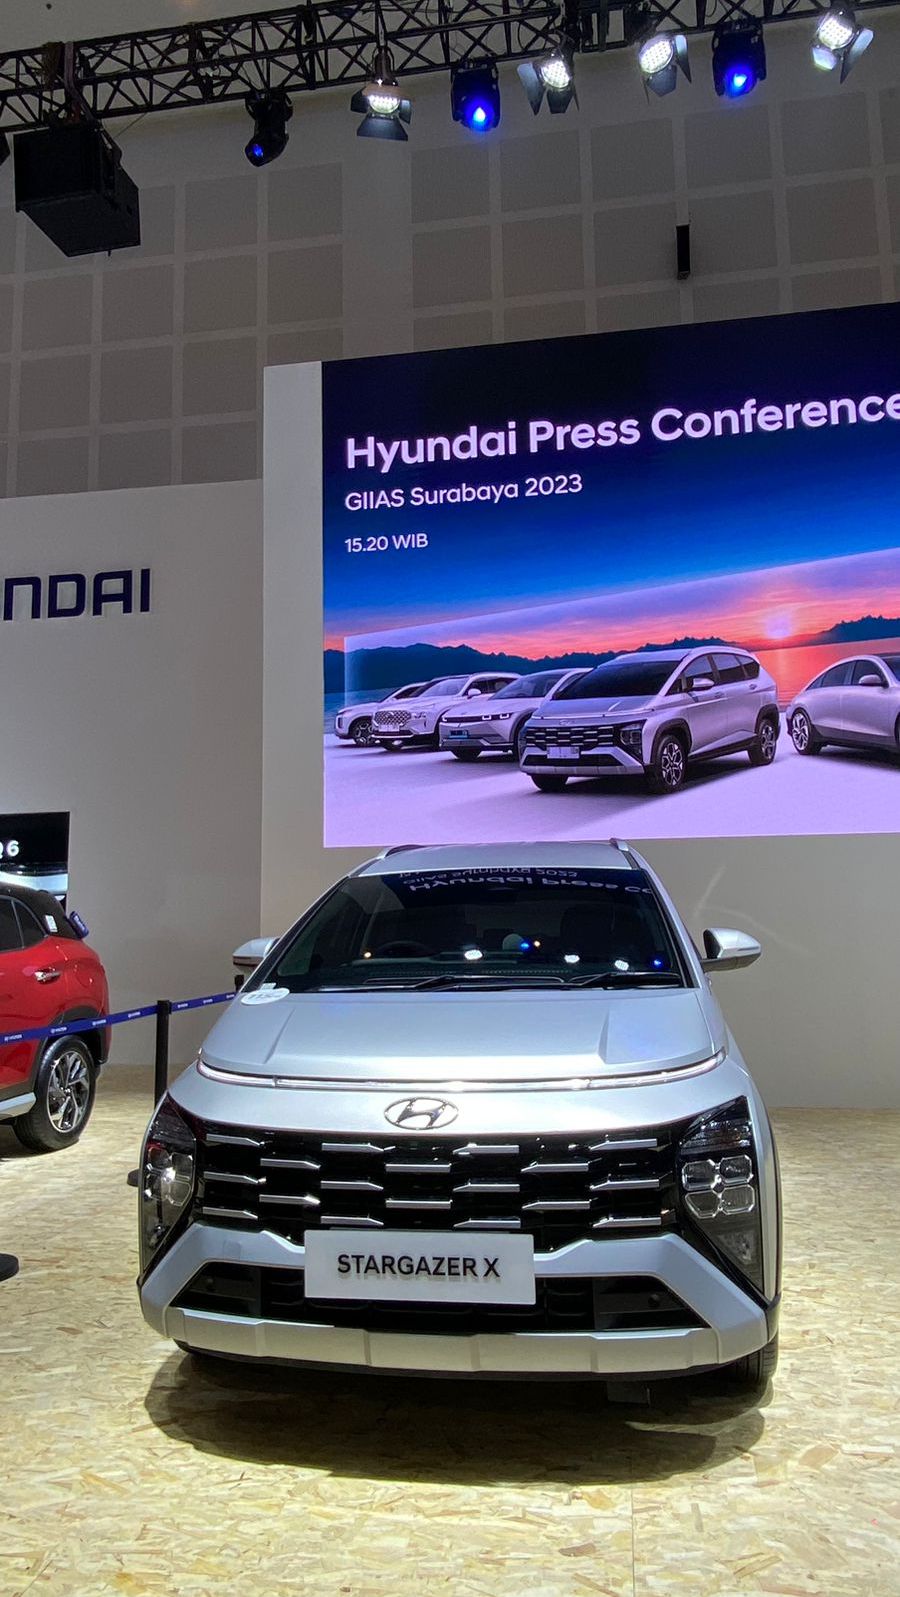 Ssst, Begini Sensasi Naik Hyundai Stargazer X dari Jakarta ke Surabaya